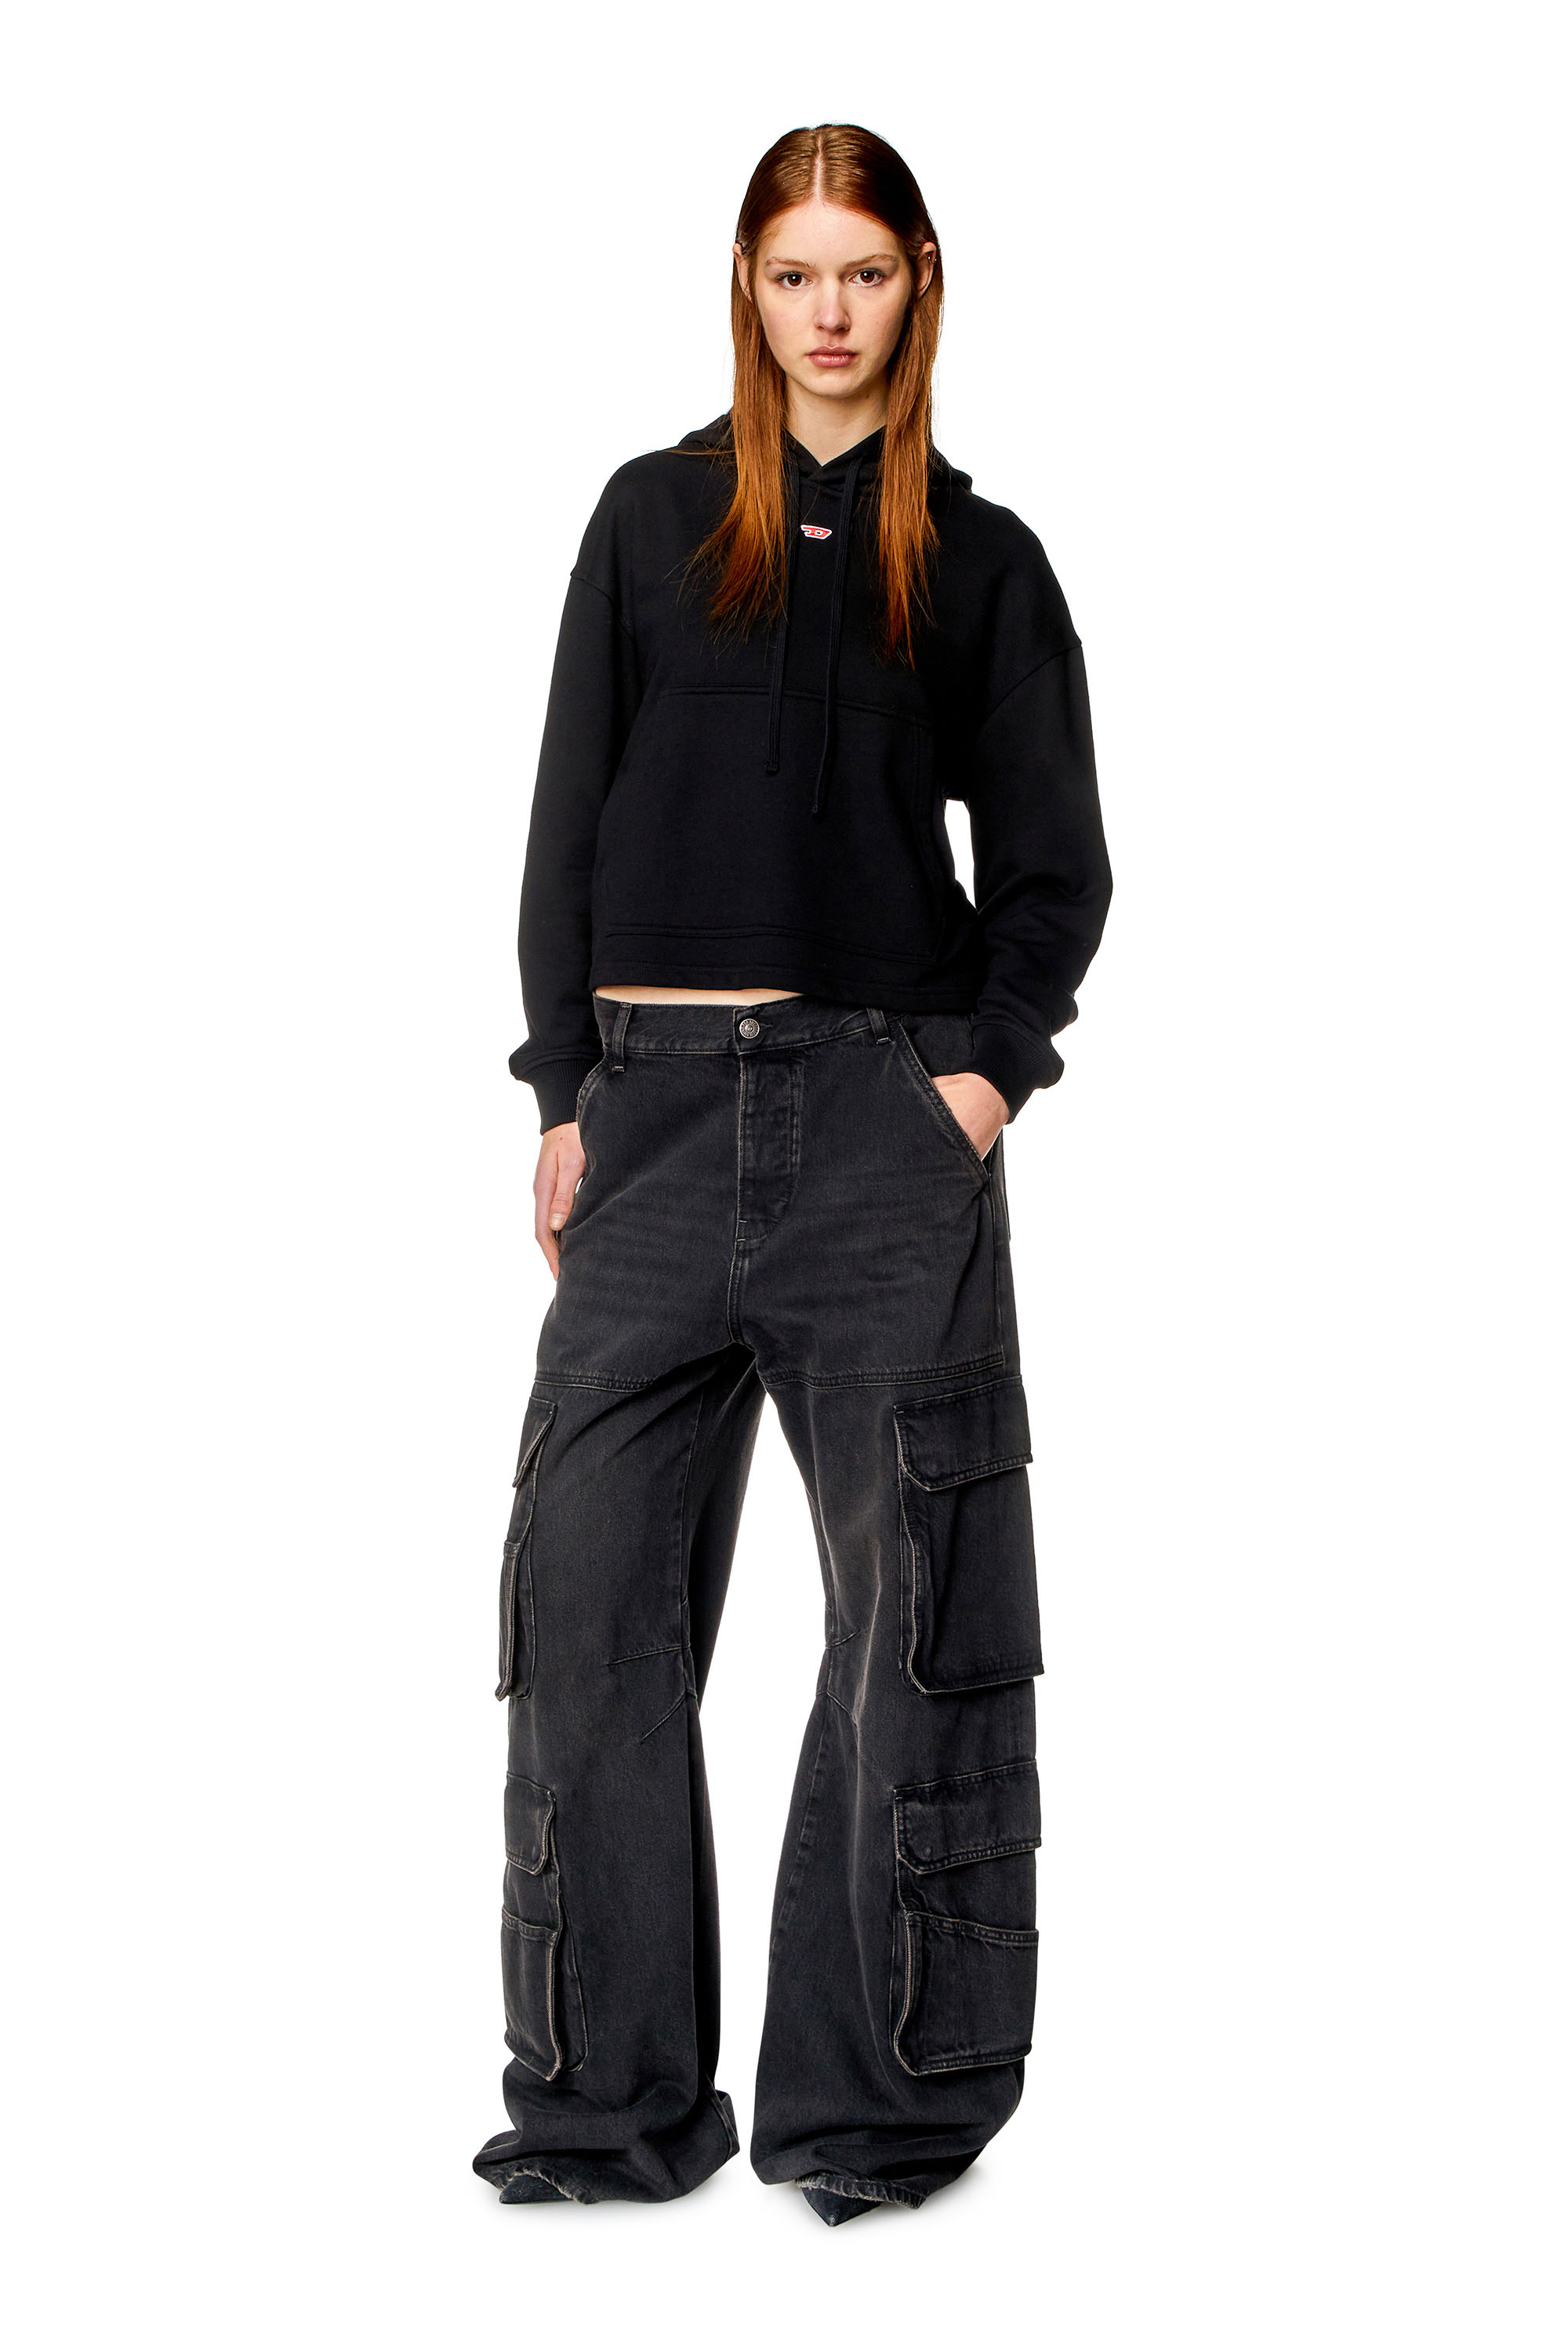 Diesel - F-JARAL-HOOD-D, Woman Oversized hoodie with D patch in Black - Image 2